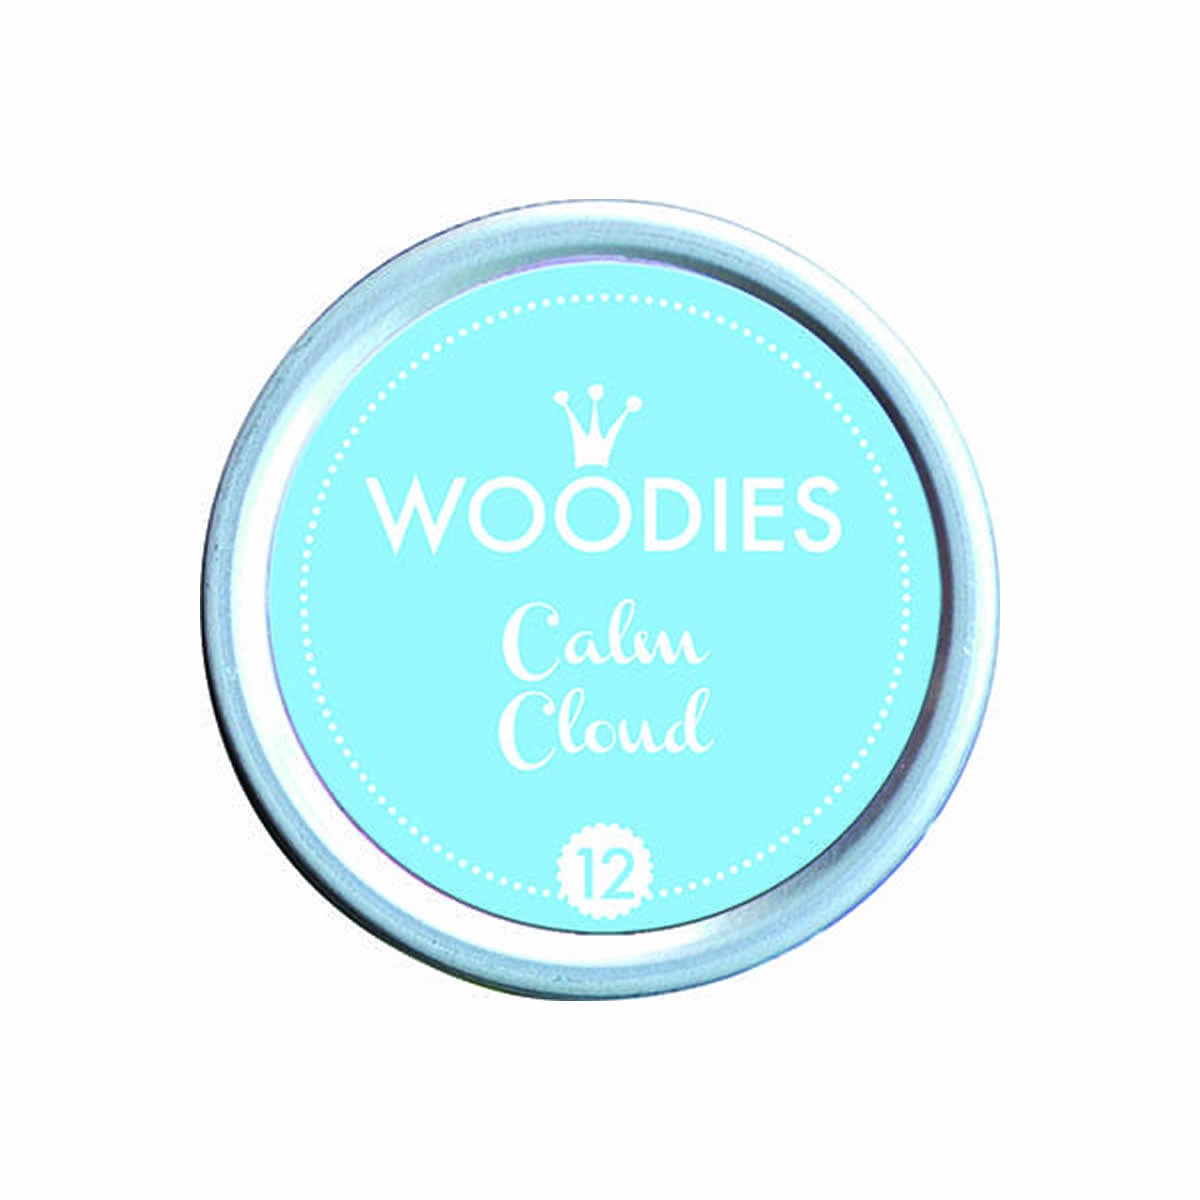 COLOP Arts & Crafts Woodies Ταμπόν Σφραγίδας Calm Cloud